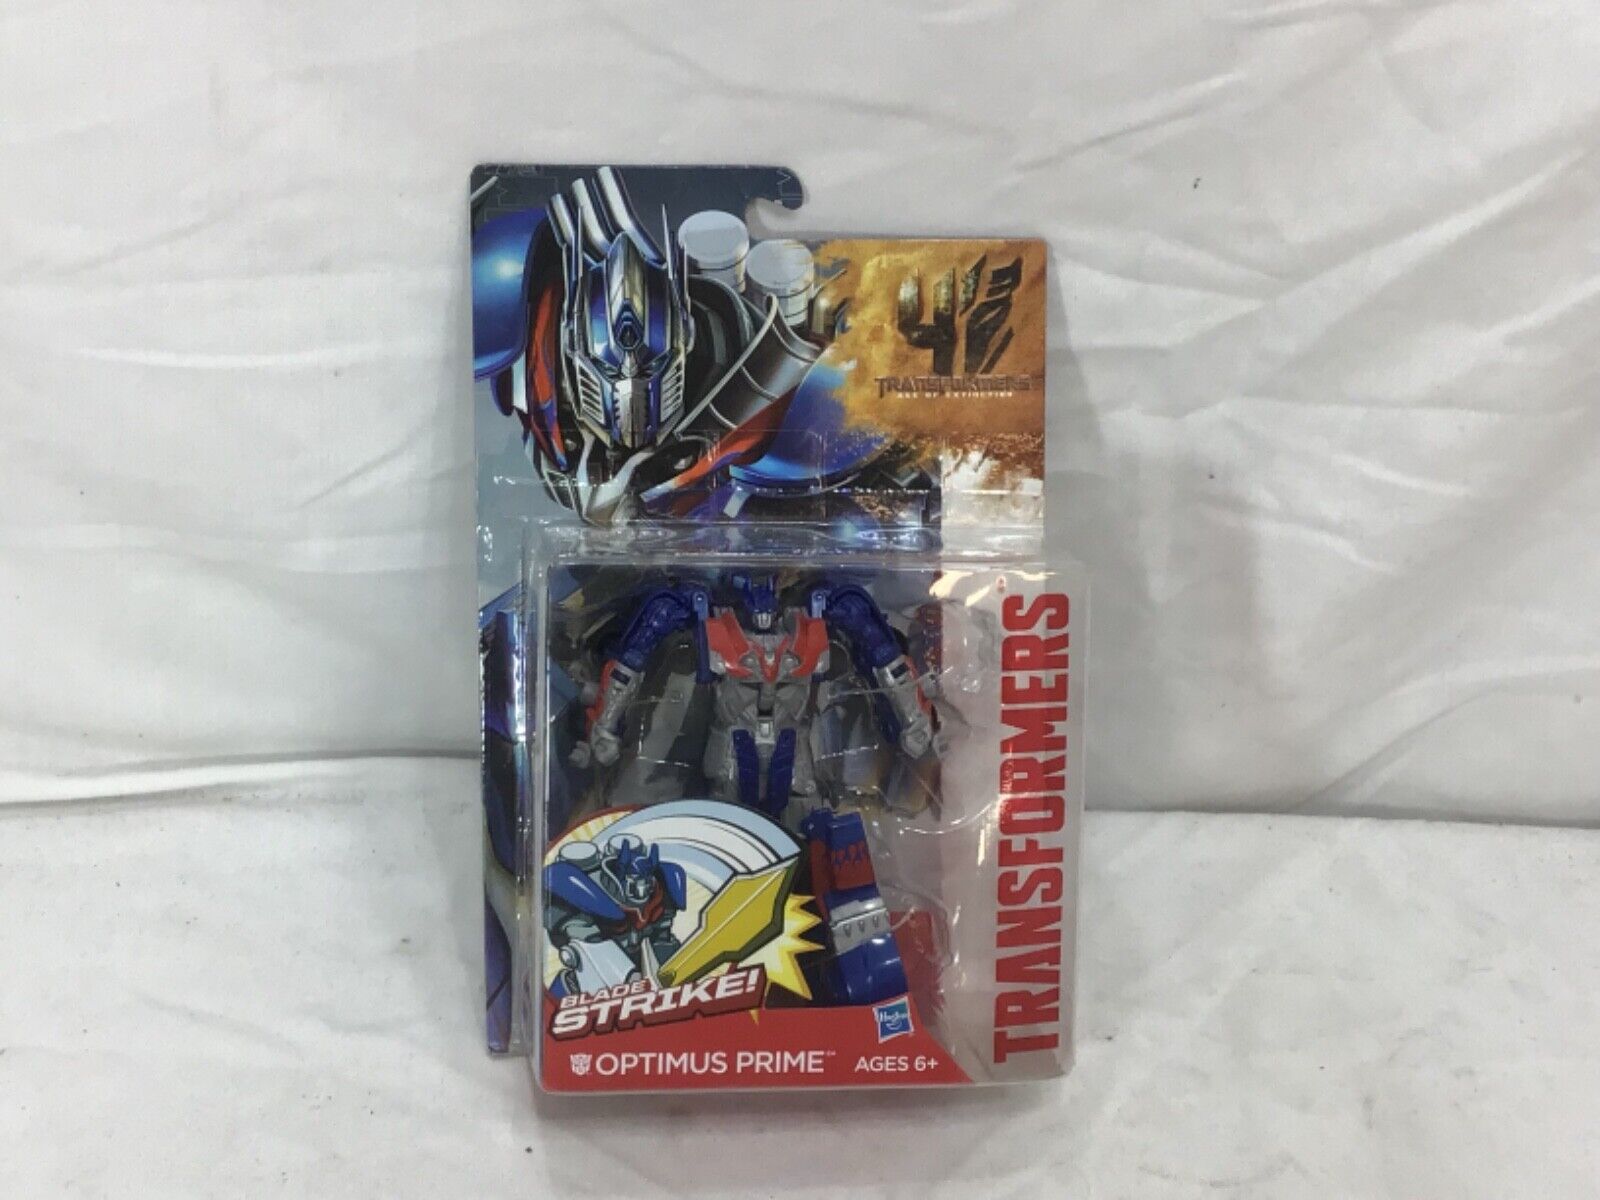 2014 Transformers Age of Extinction AOE Blade Strike Optimus Prime Deluxe Figure